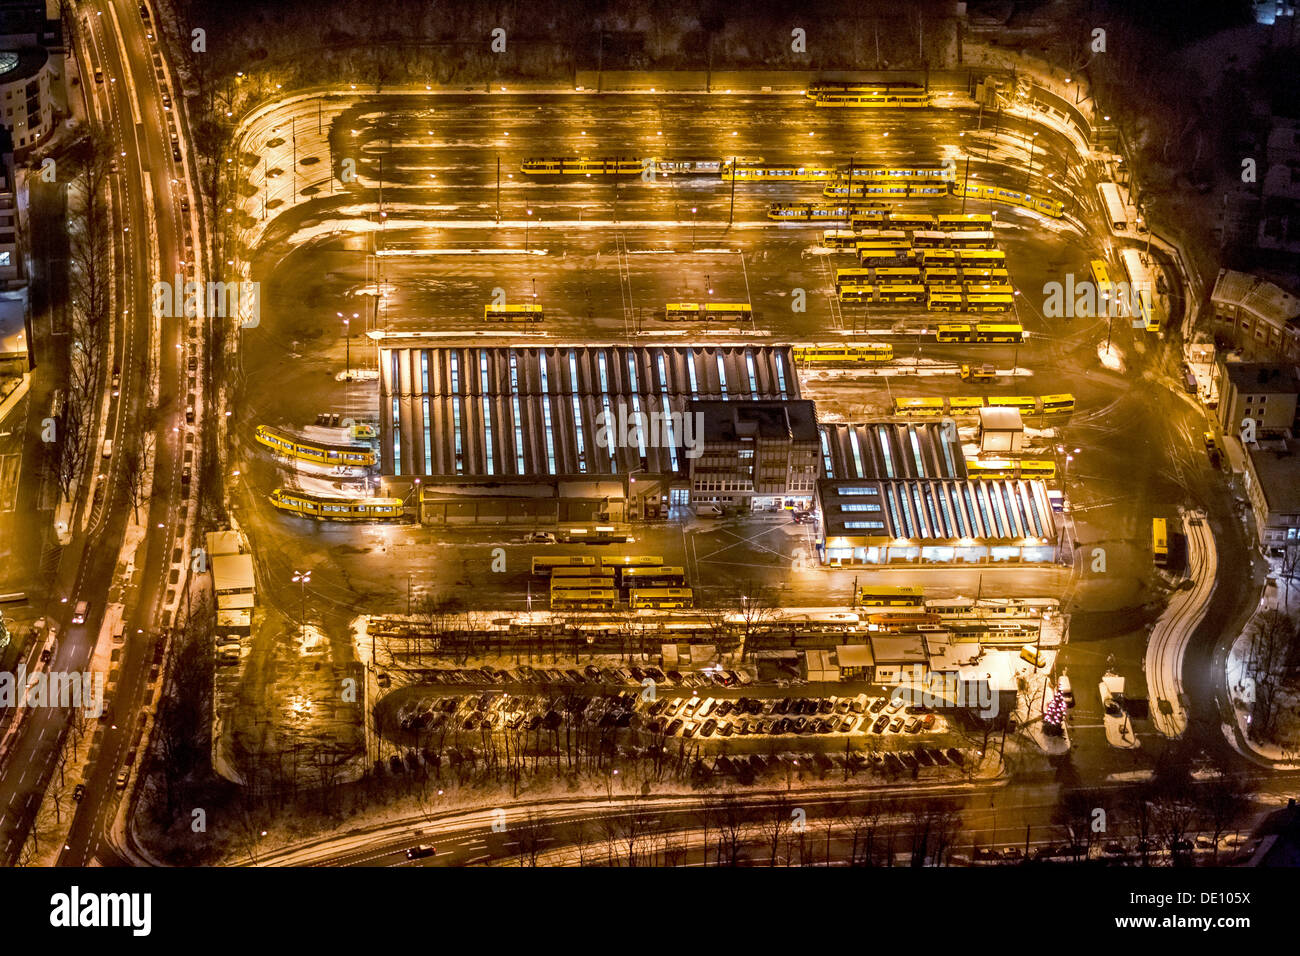 Aerial view, EVAG, Essener Verkehrsbetriebe, public transport company, tram depot, at night Stock Photo